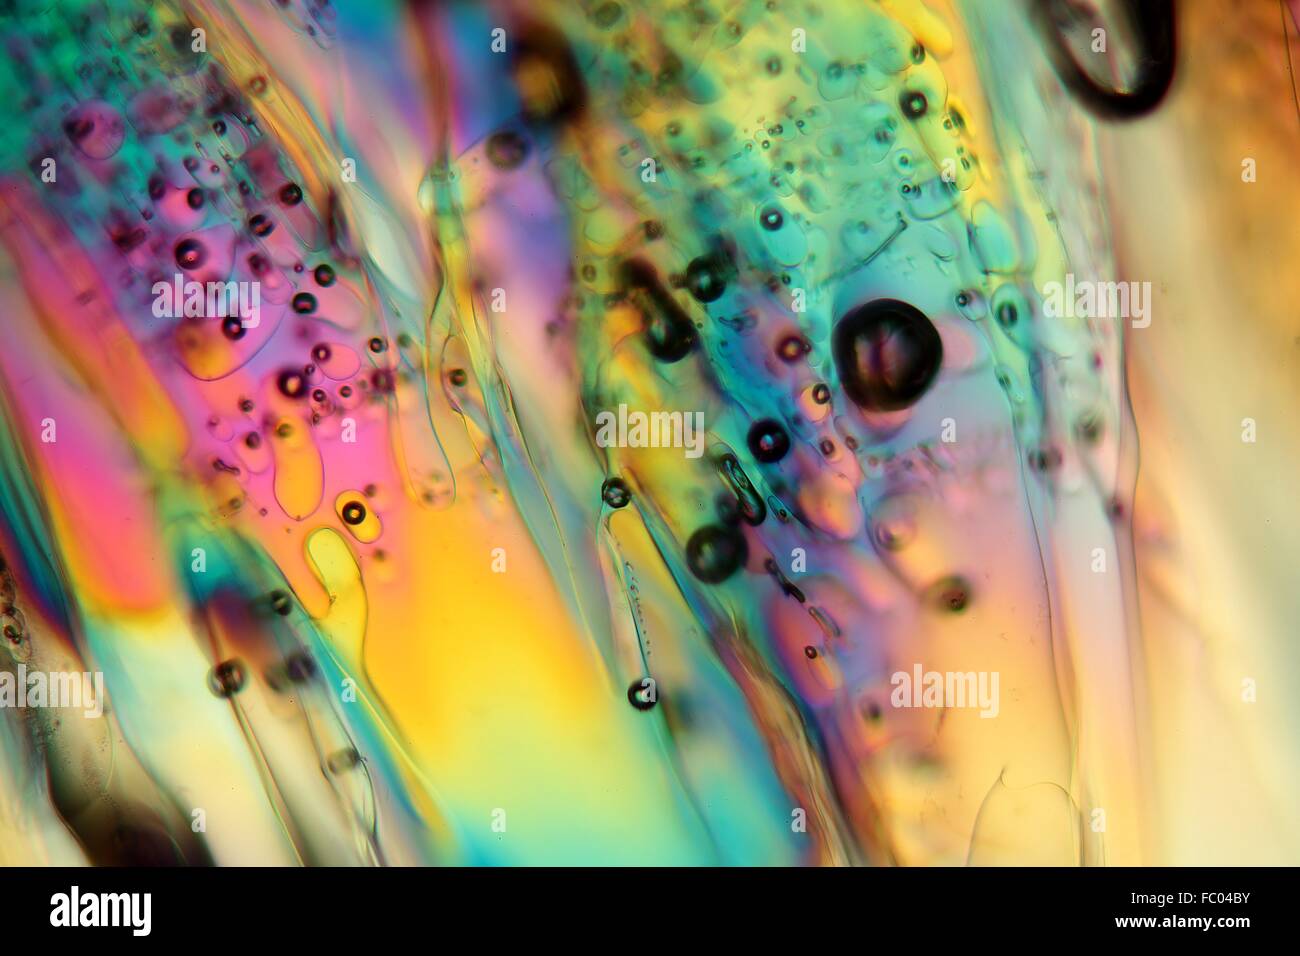 Ice under a microscope Stock Photo - Alamy